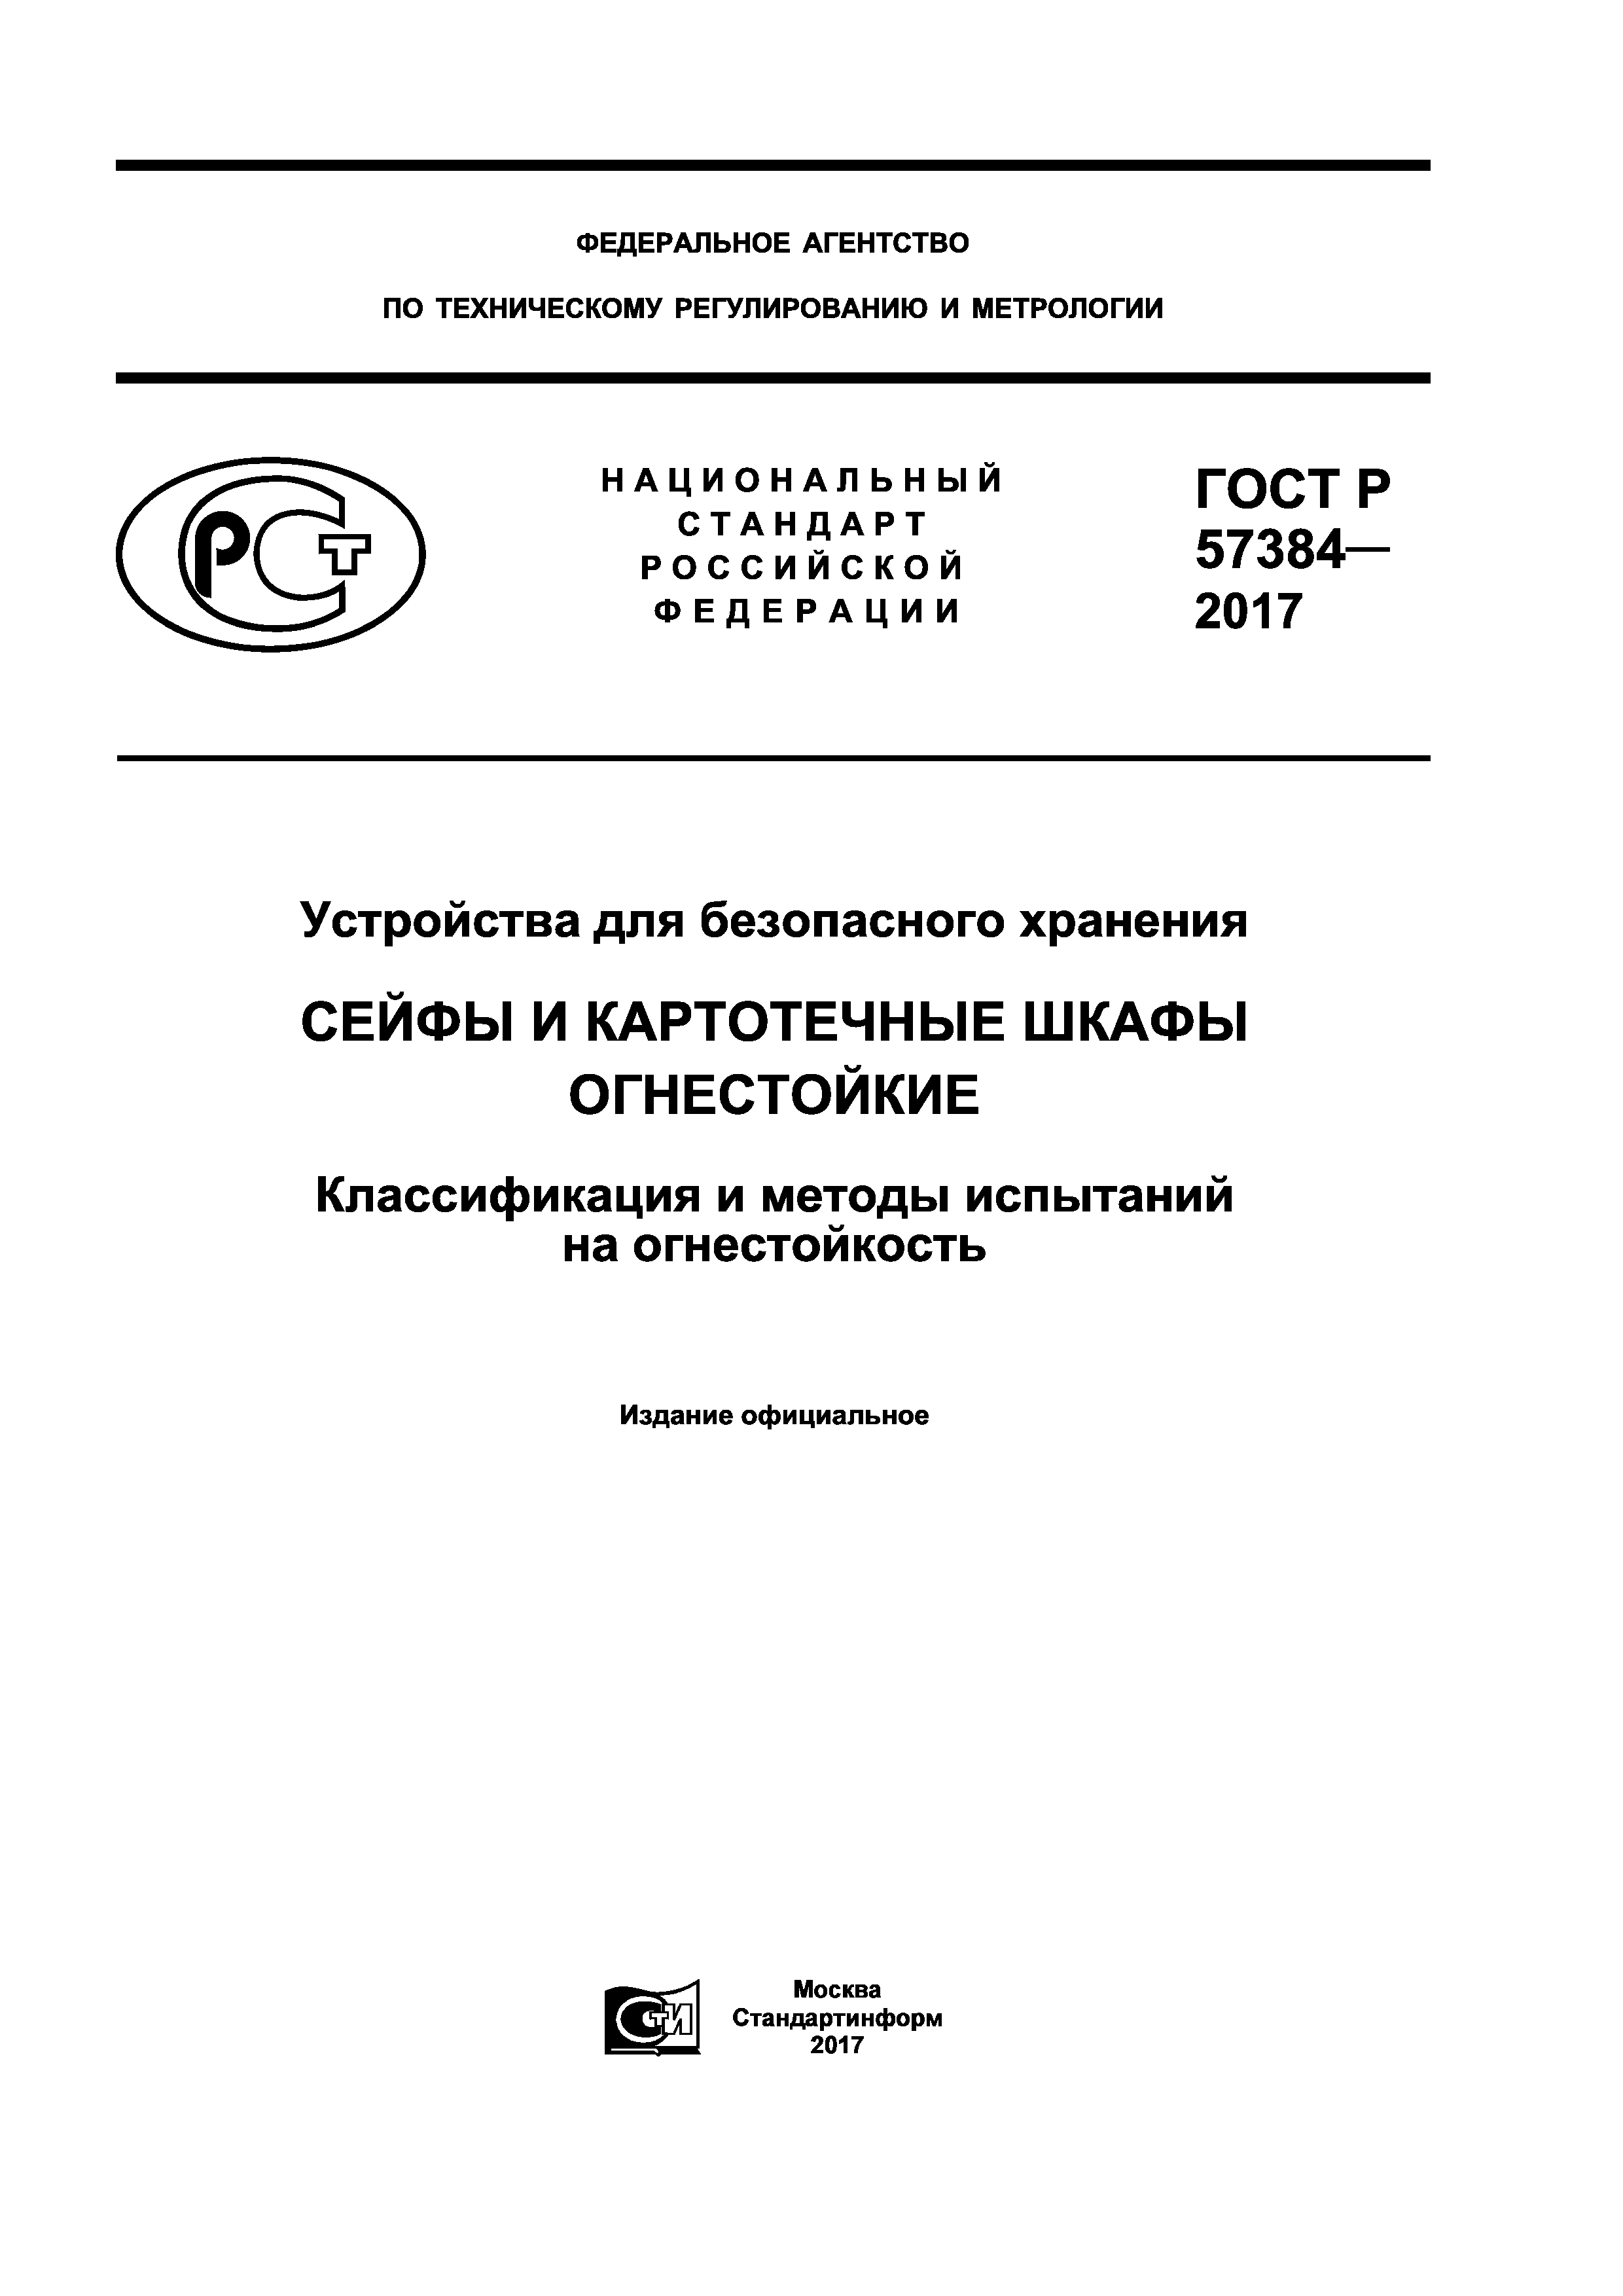 ГОСТ Р 57384-2017